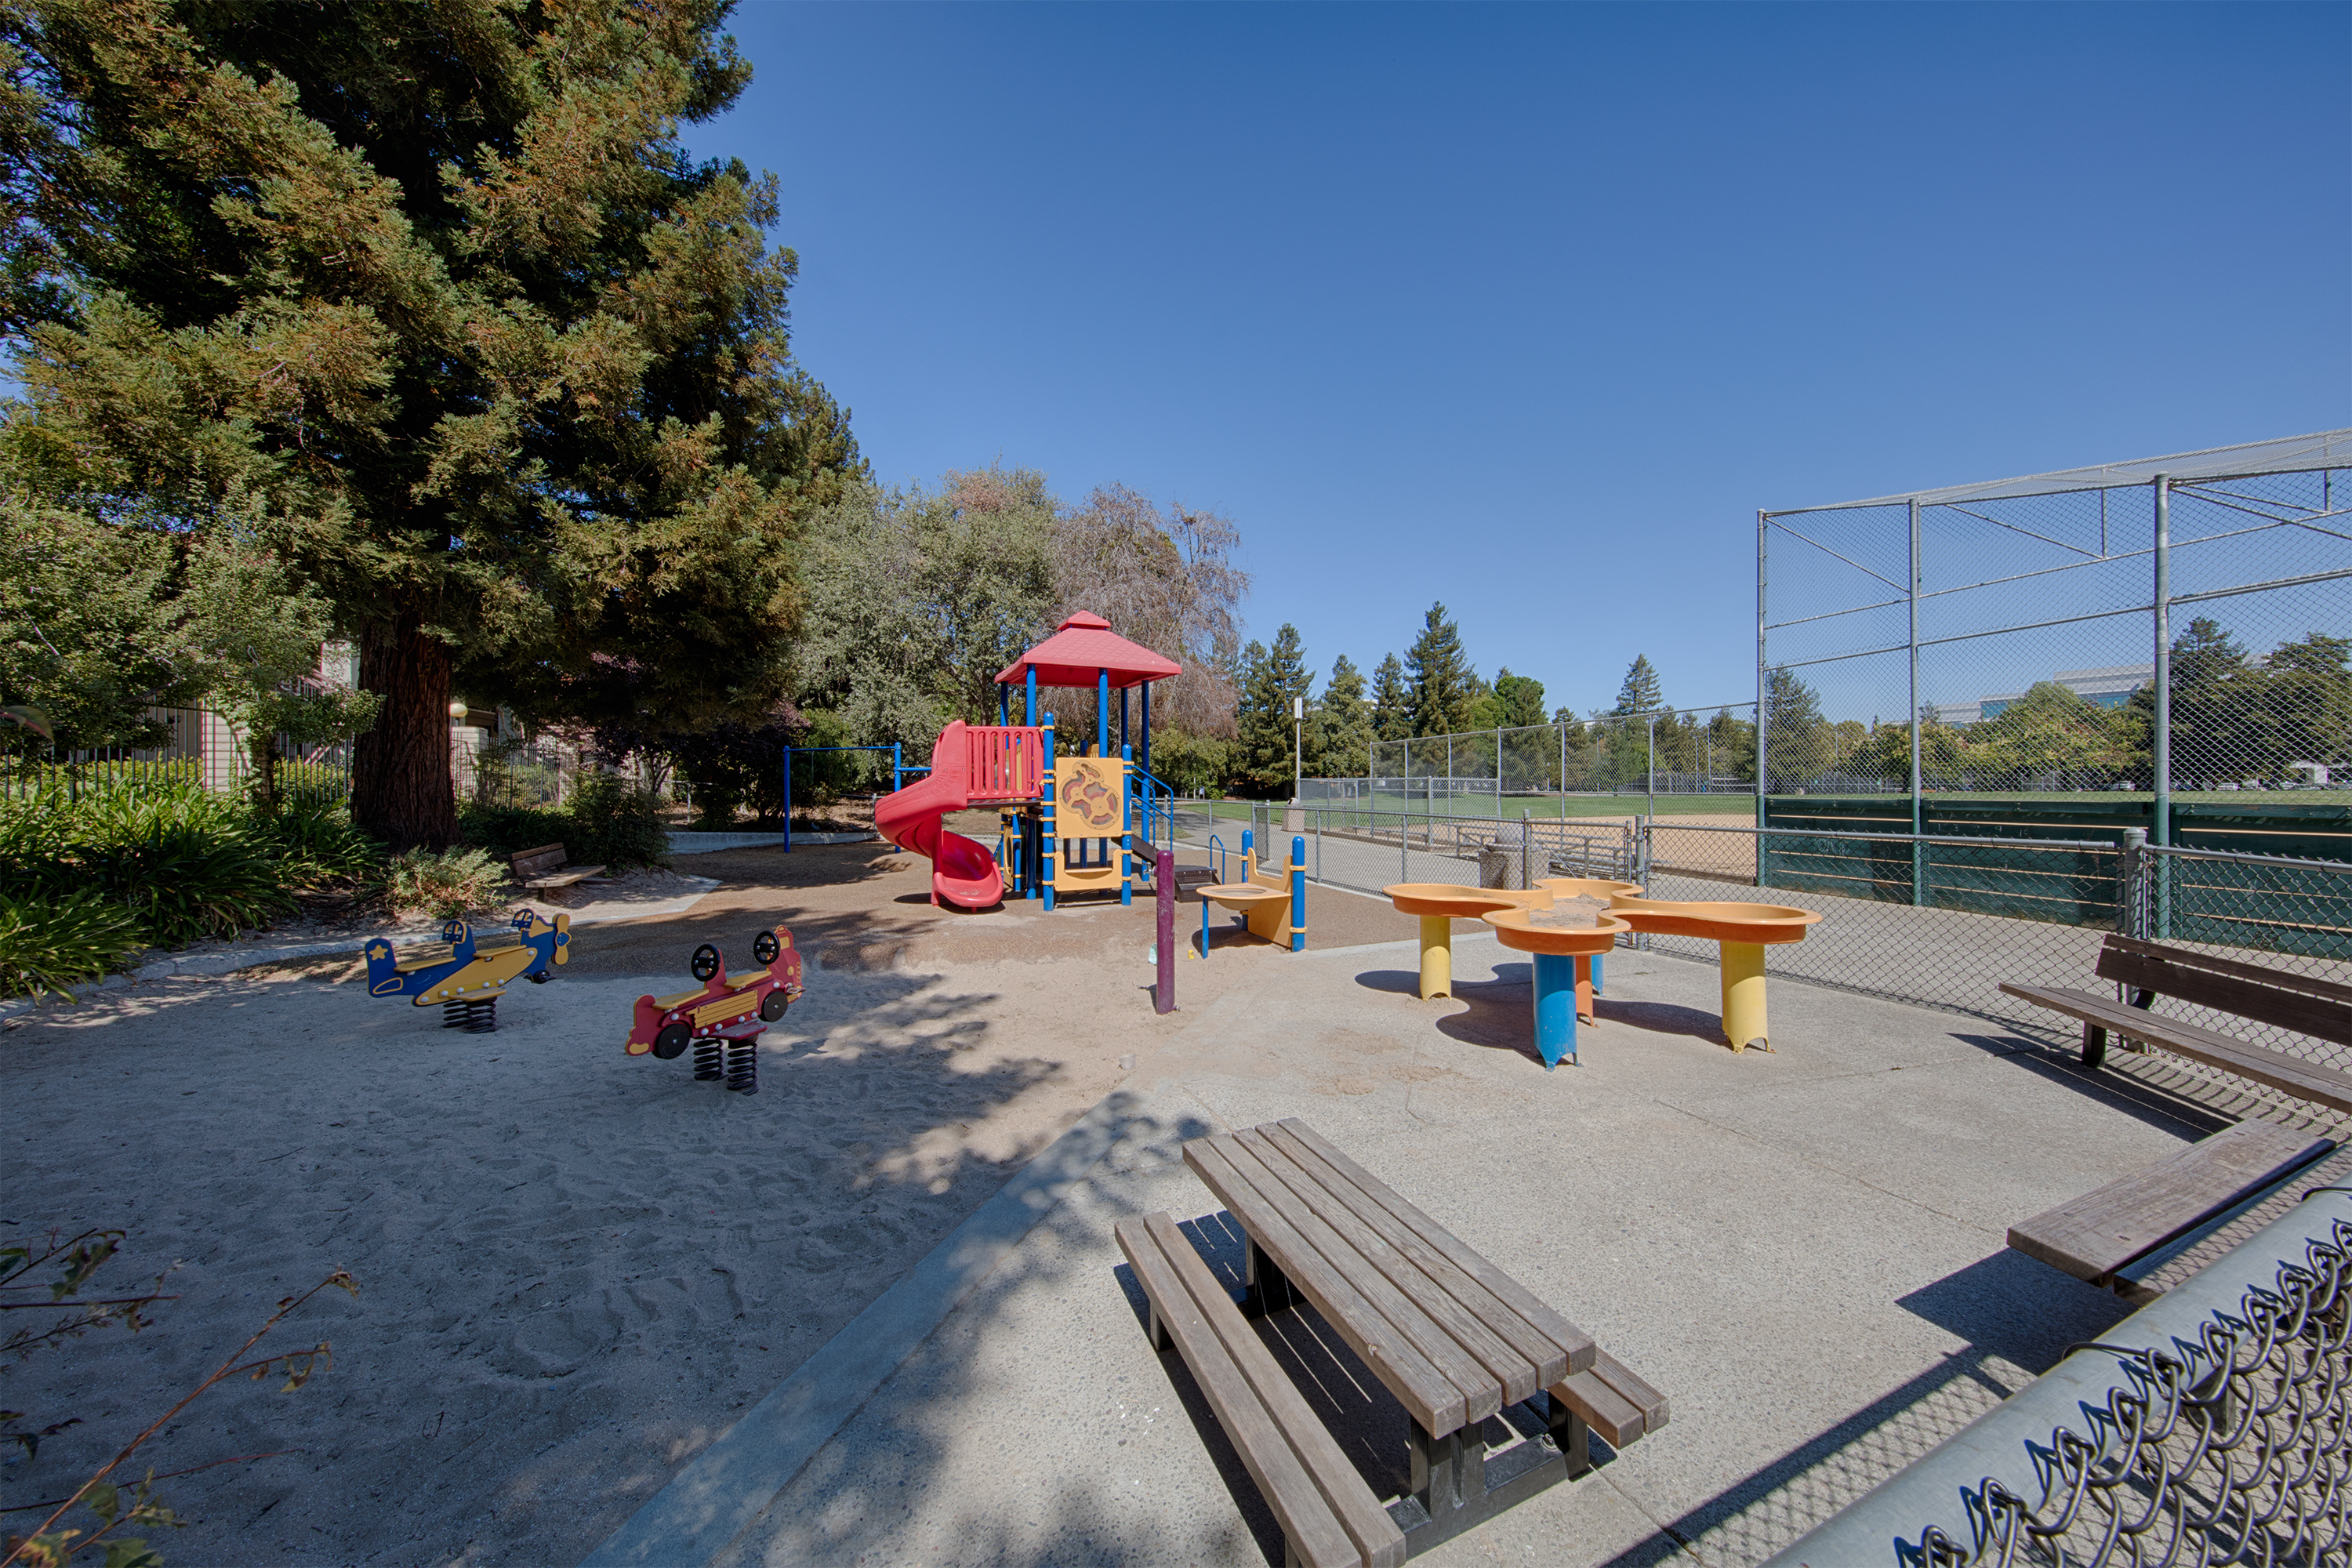 436 Costa Mesa Ter #A, Sunnyvale 94085 - Park Playground (A)